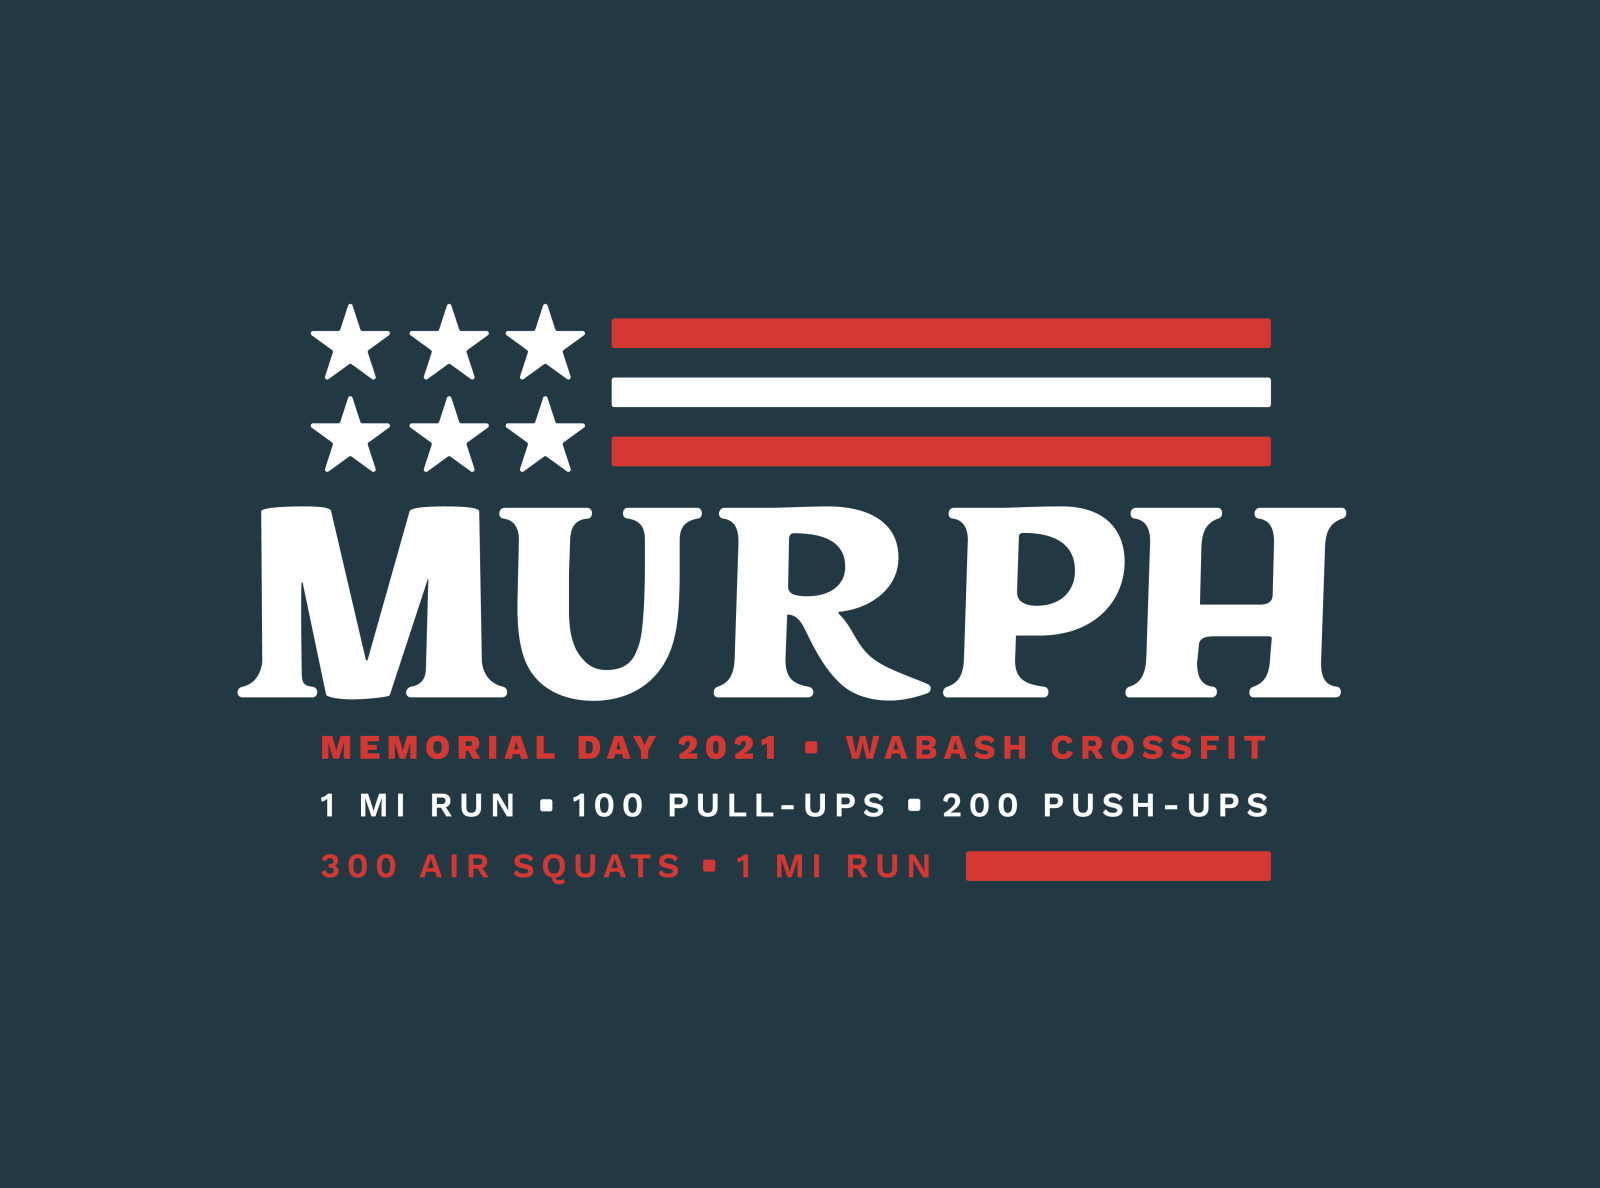 Memorial Day Murph Logo by Haley Hunter on Dribbble